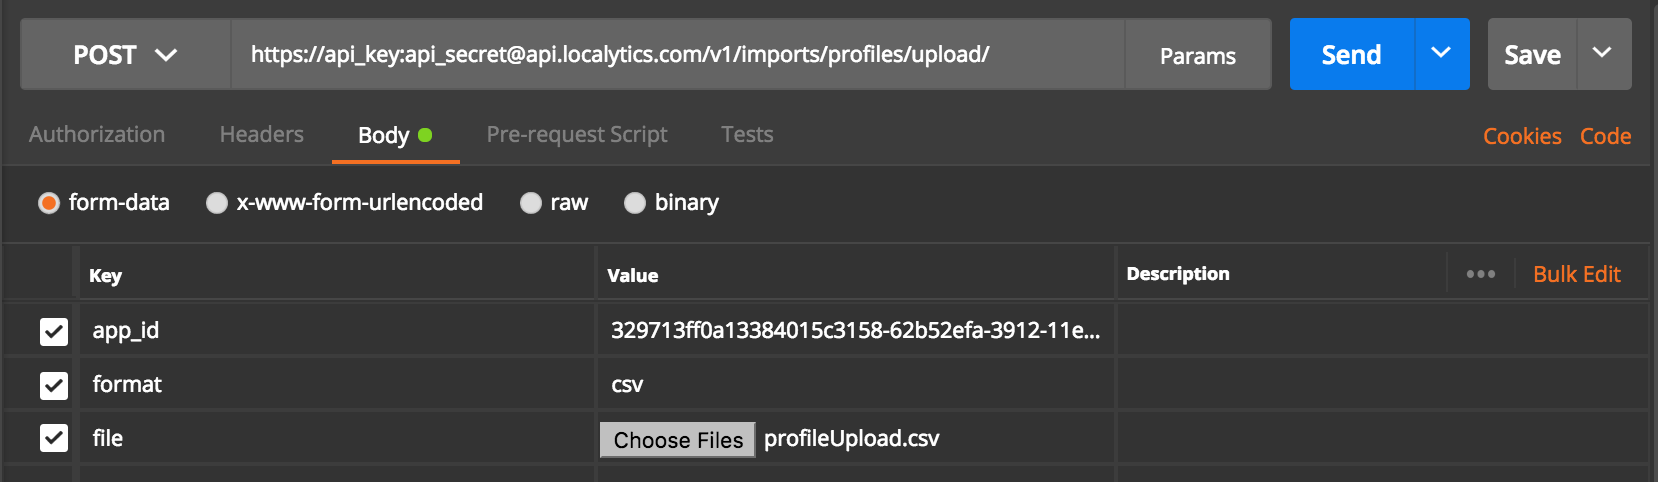 Postman Profile Import API example